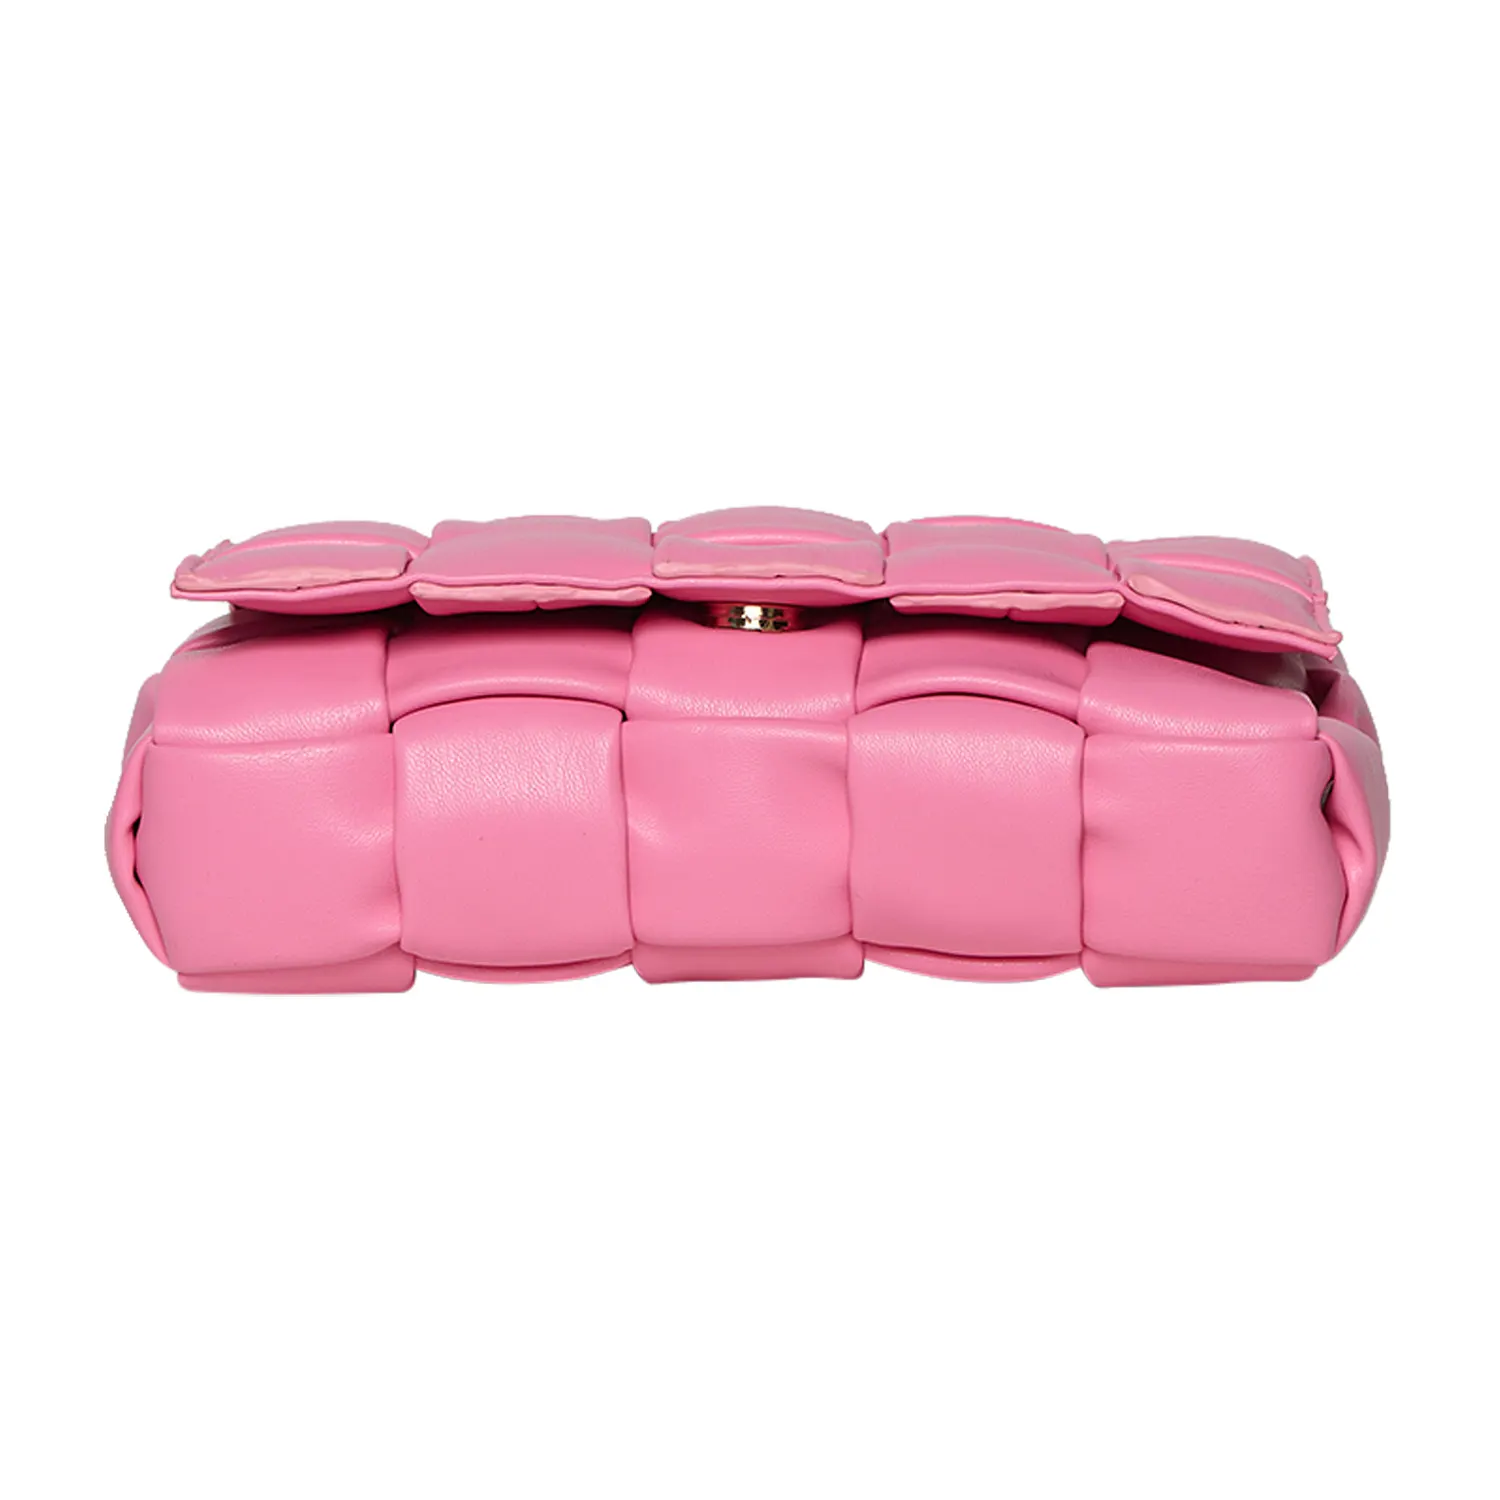 Brick Bag - Bubble Pink